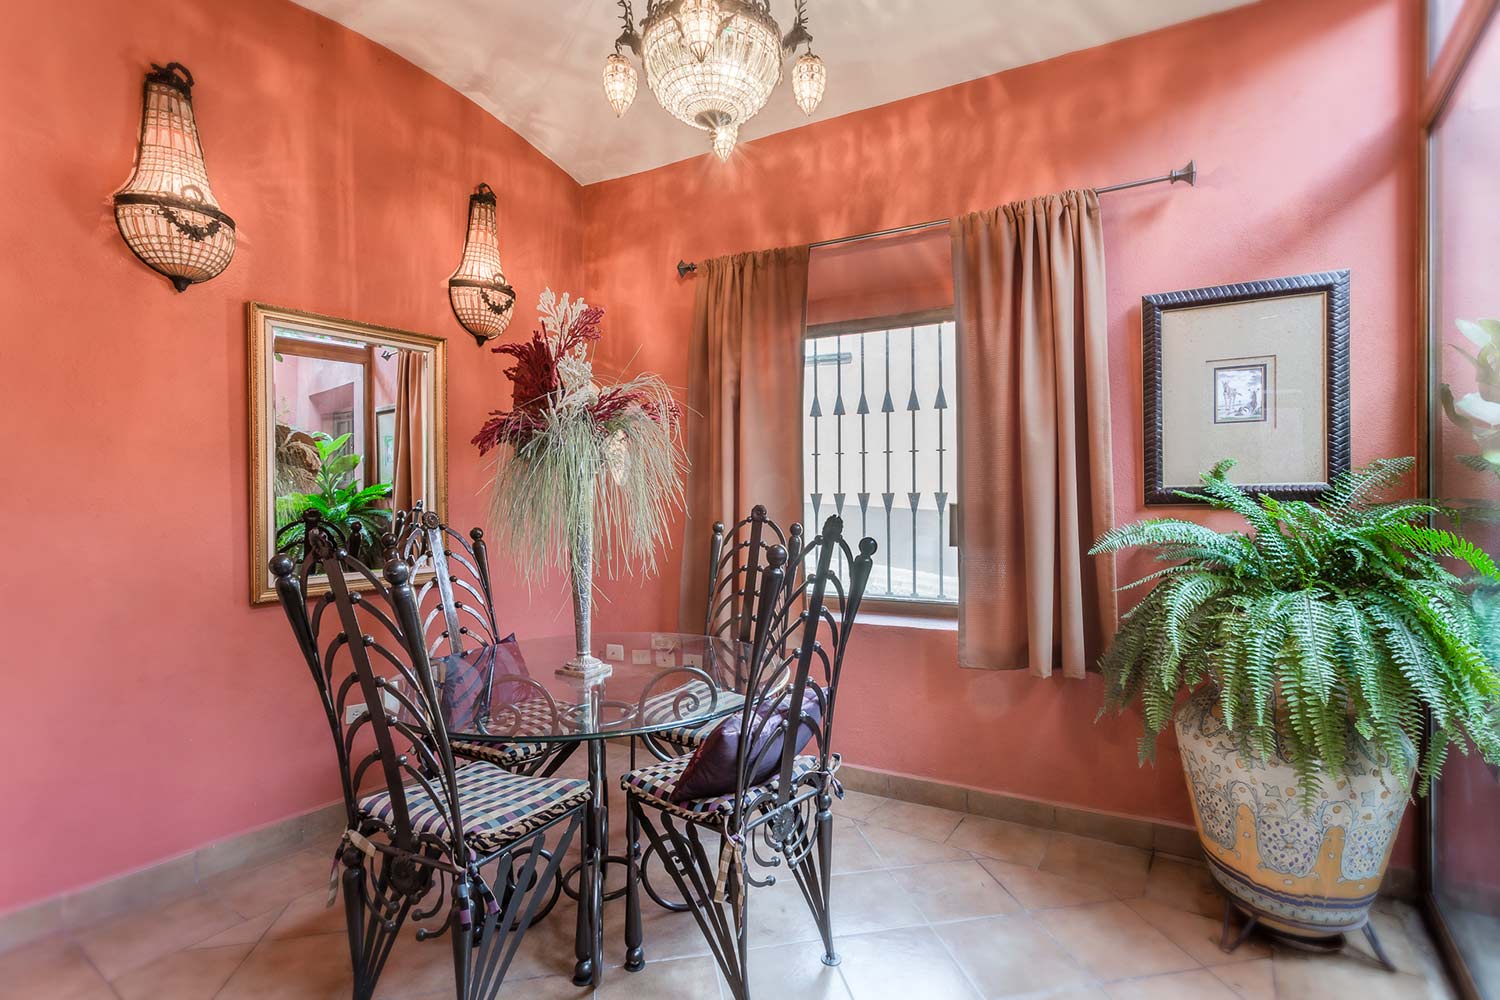 Photo Showing Casa de la Vista Dining Room With French Crystal Sconces